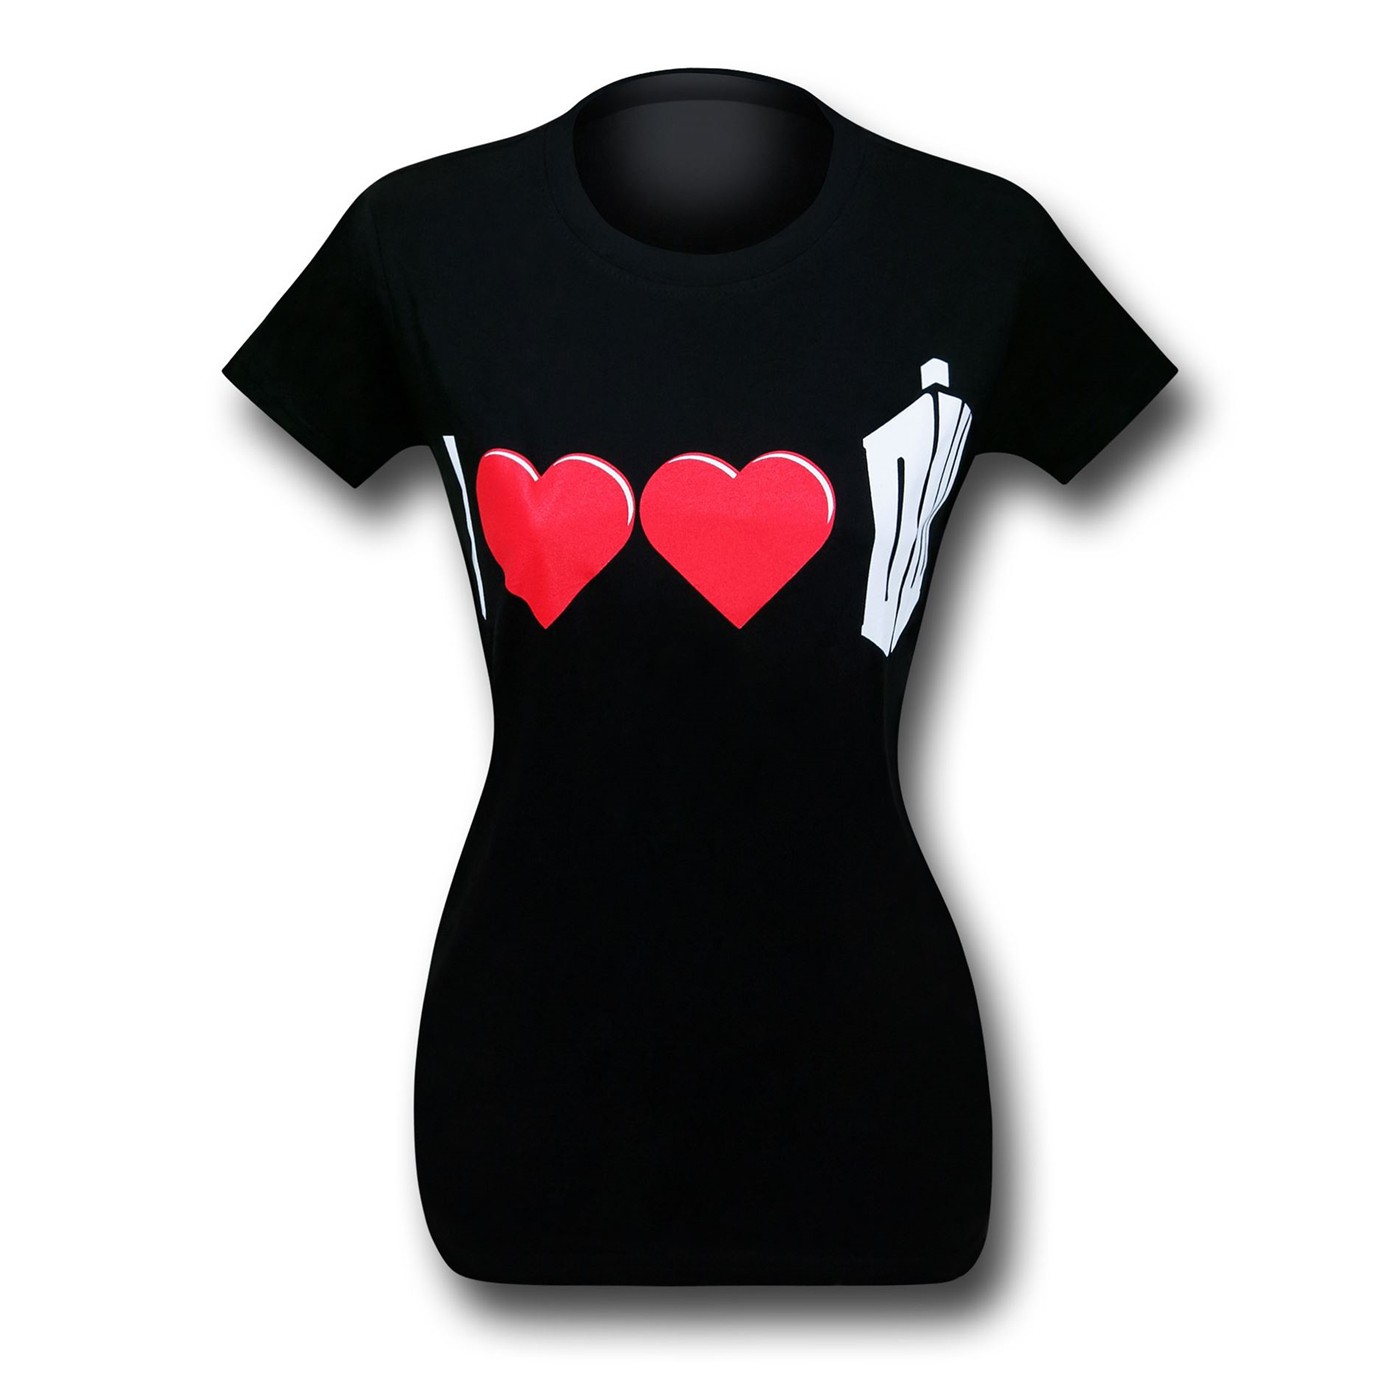 I Double Heart Doctor Who Women's T-Shirt